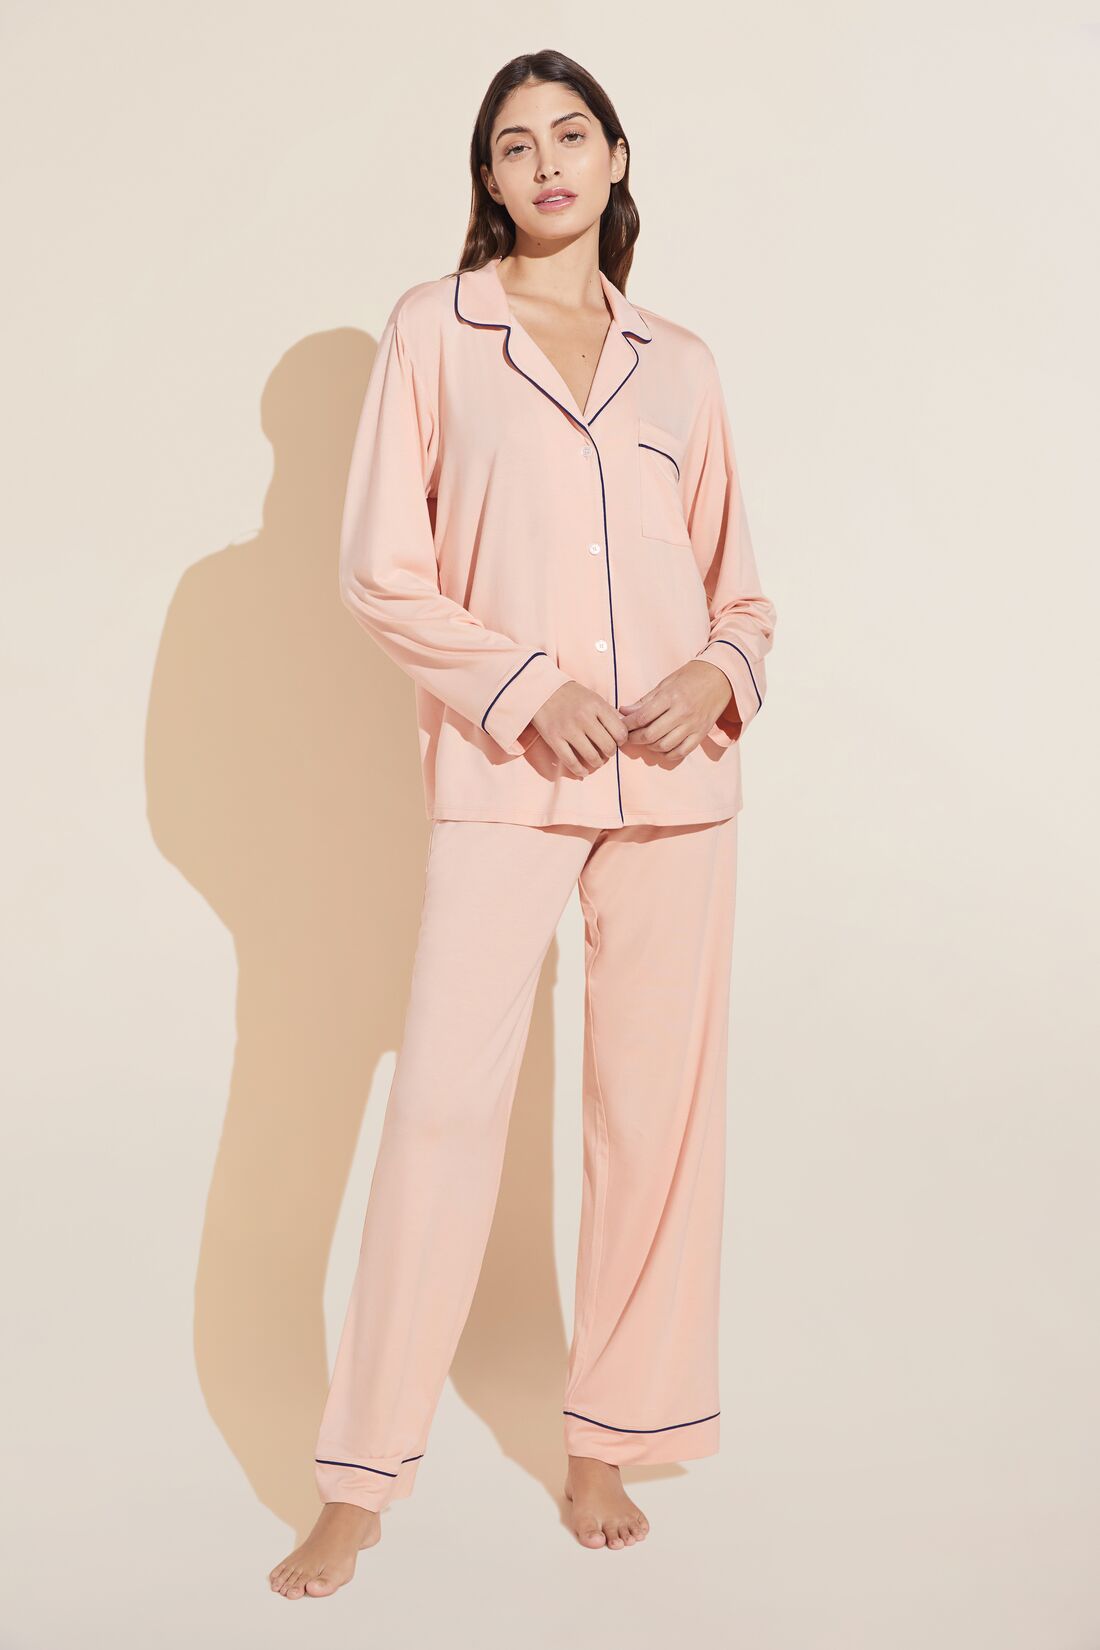 Just Love Women's Thermal Underwear Pajamas Set (Navy, Medium) 